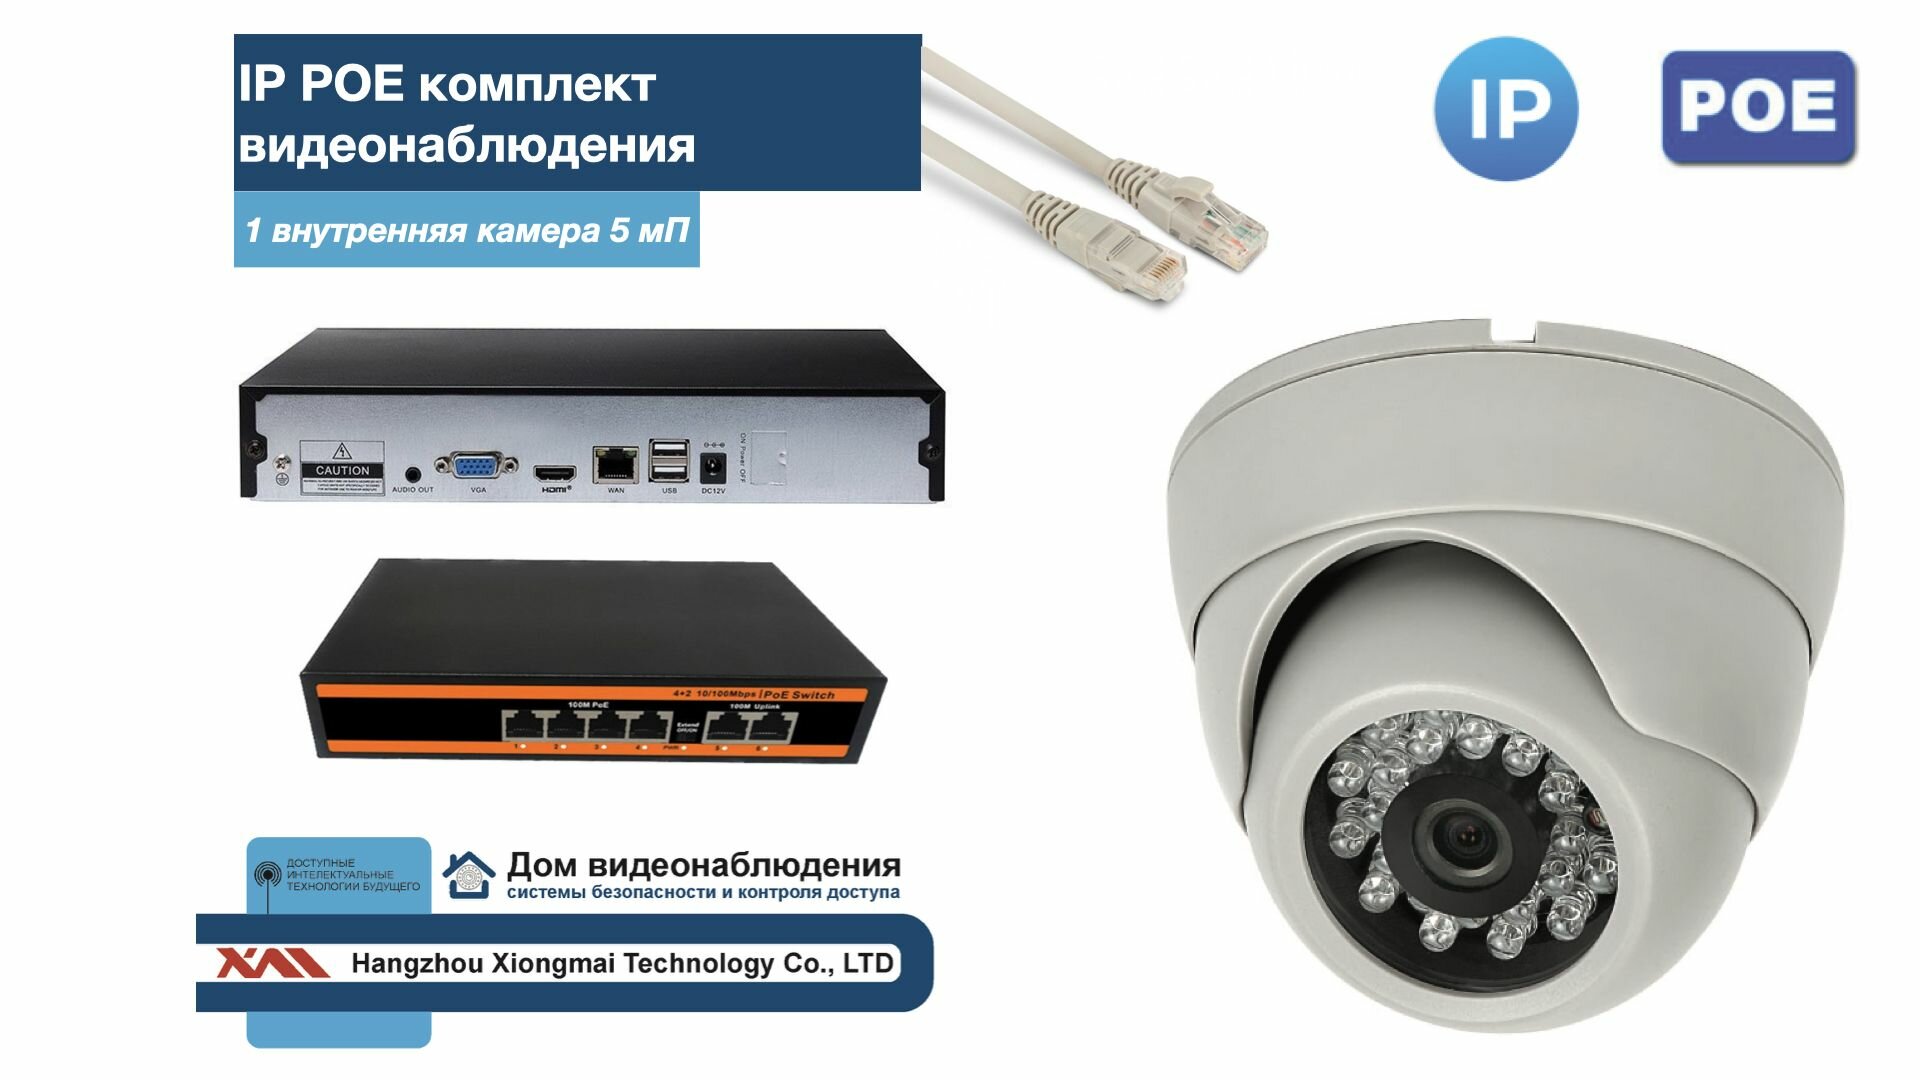 Полный IP POE комплект видеонаблюдения на 1 камеру (KIT1IPPOE300W5MP)